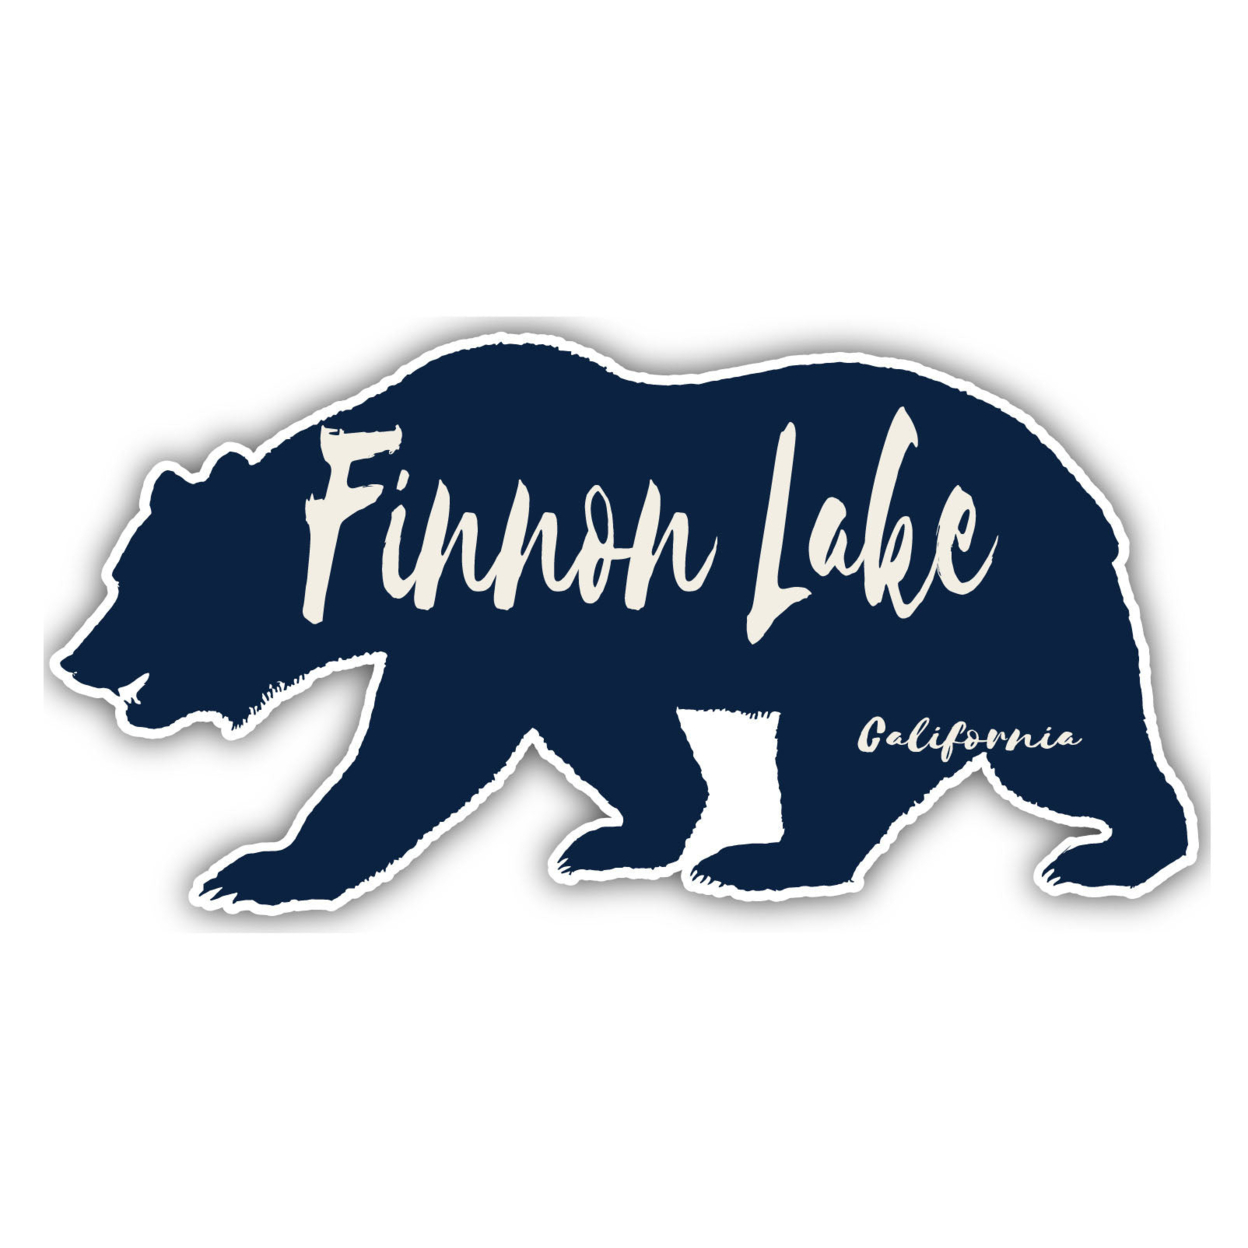 Finnon Lake California Souvenir Decorative Stickers (Choose Theme And Size) - 4-Pack, 8-Inch, Tent